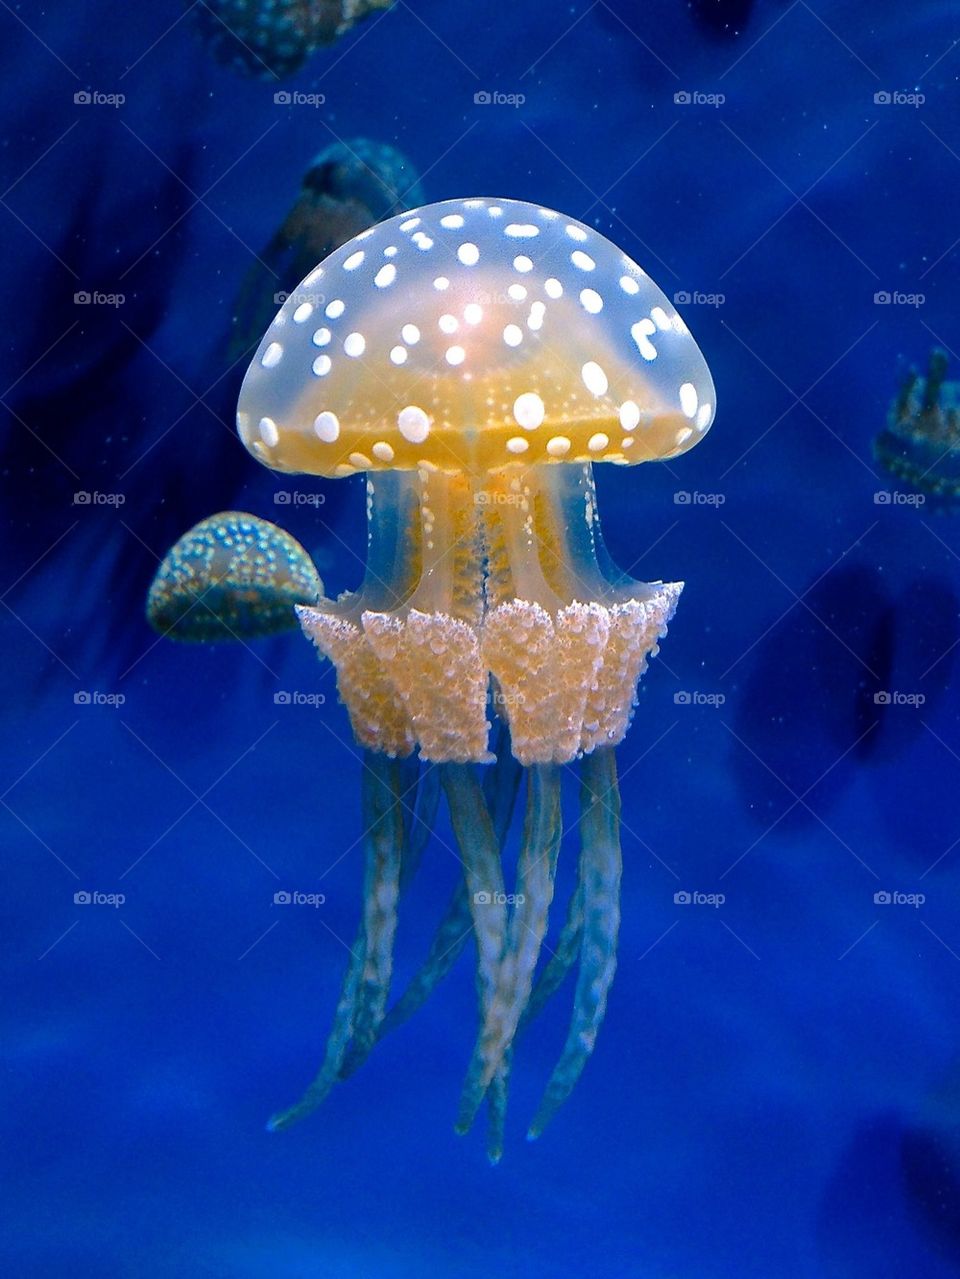 Blue moon Jellyfish